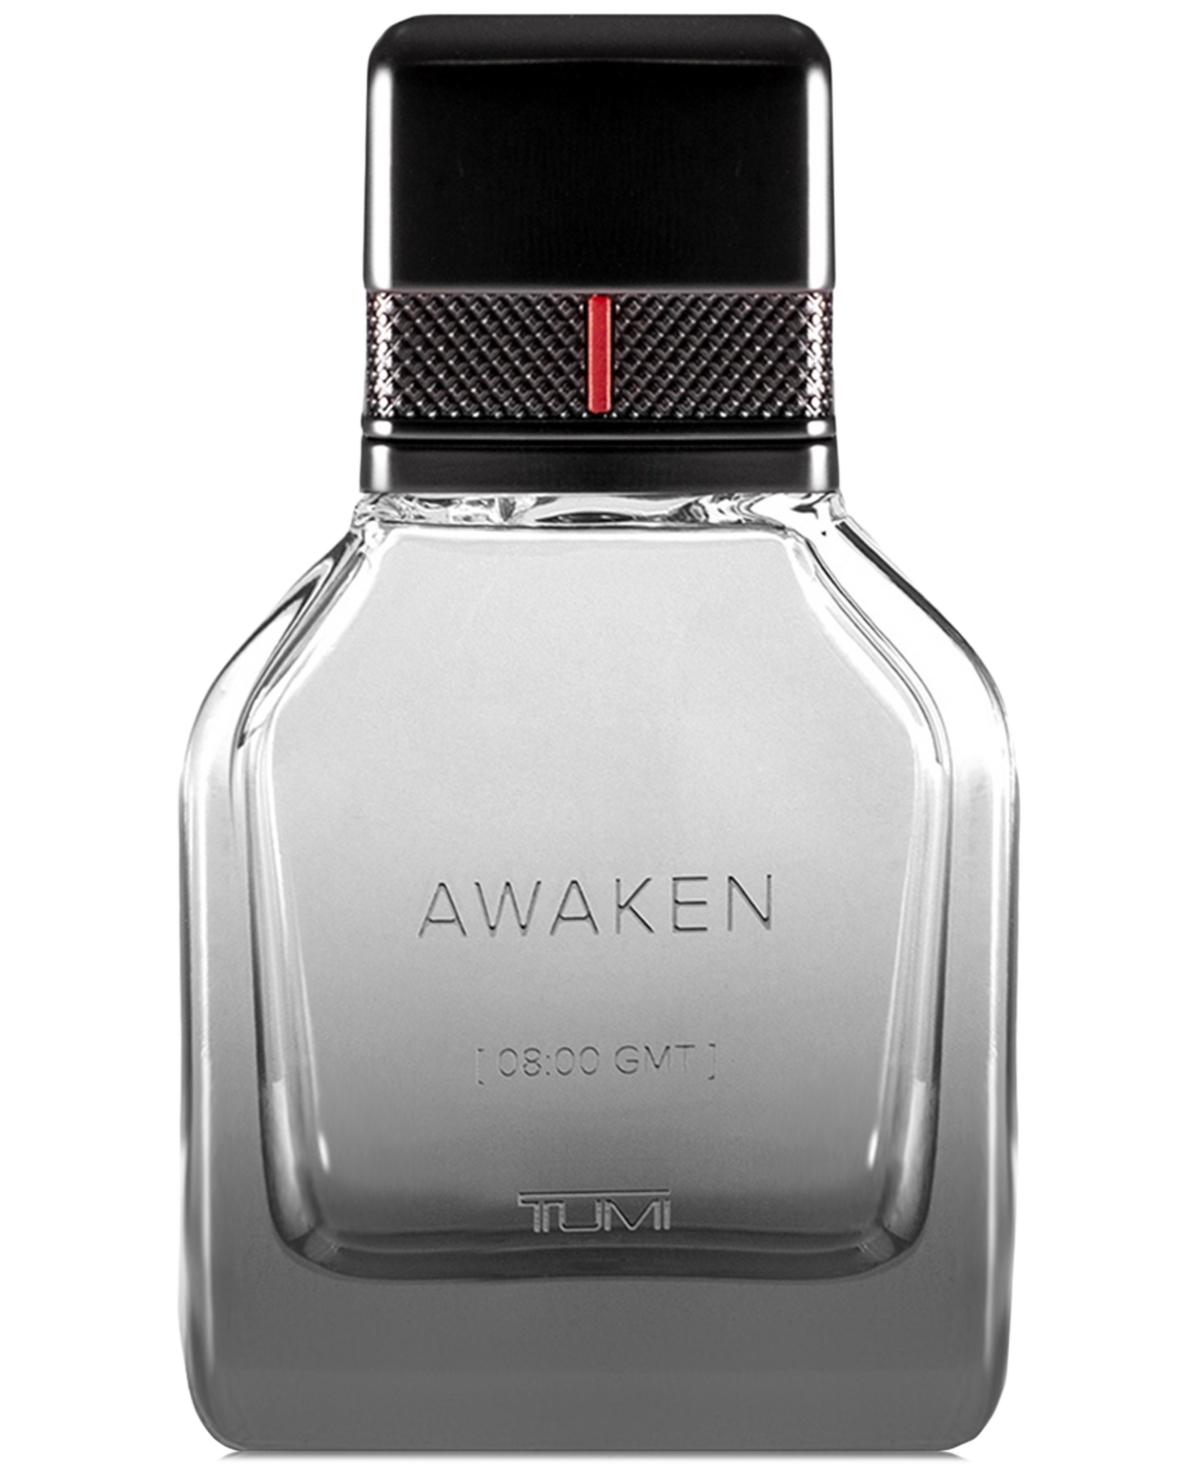 Men's Awaken [08:00 Gmt] Eau de Parfum Spray, 1 oz.